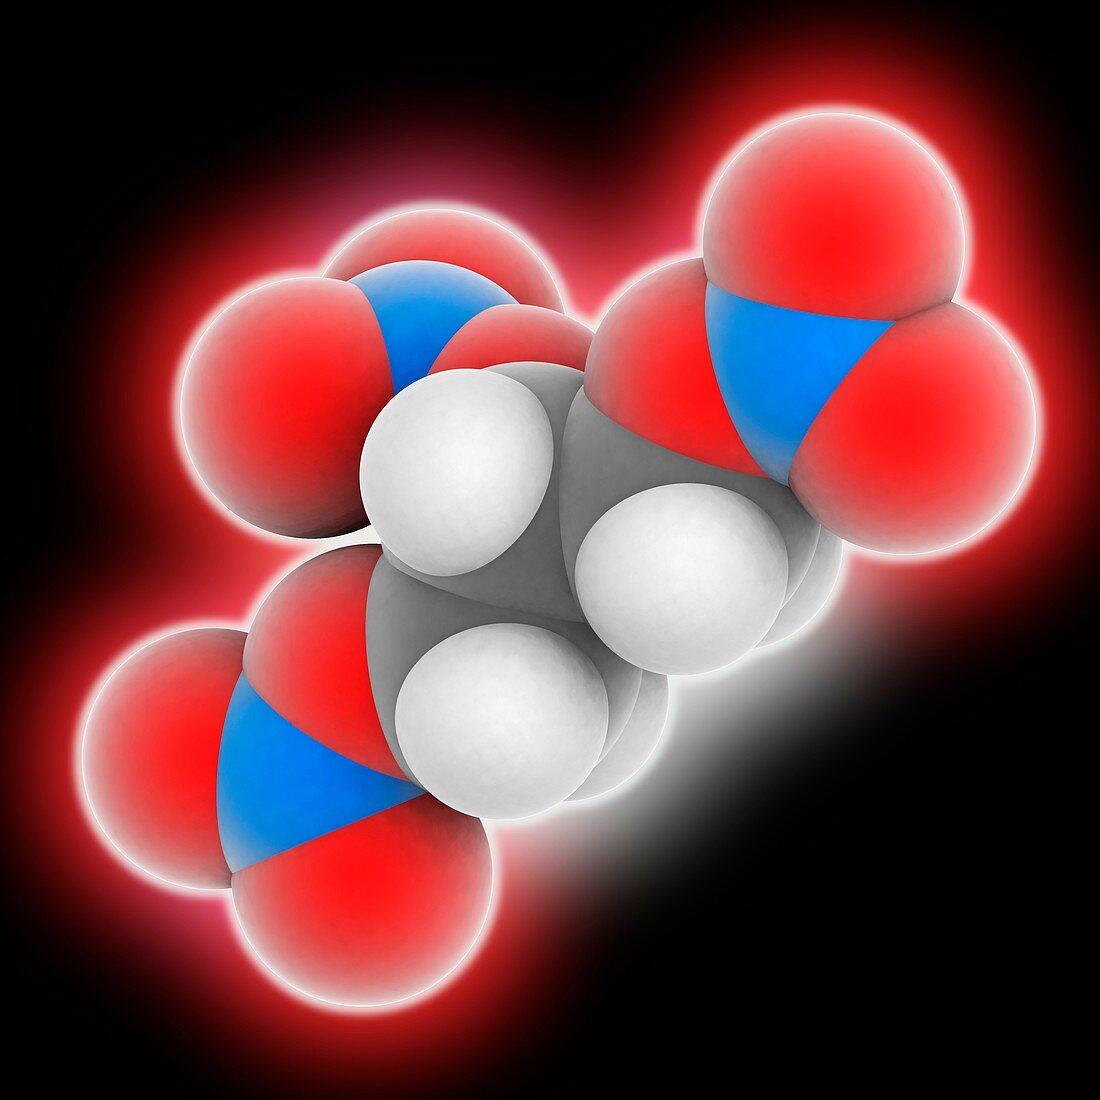 Nitroglycerin molecule